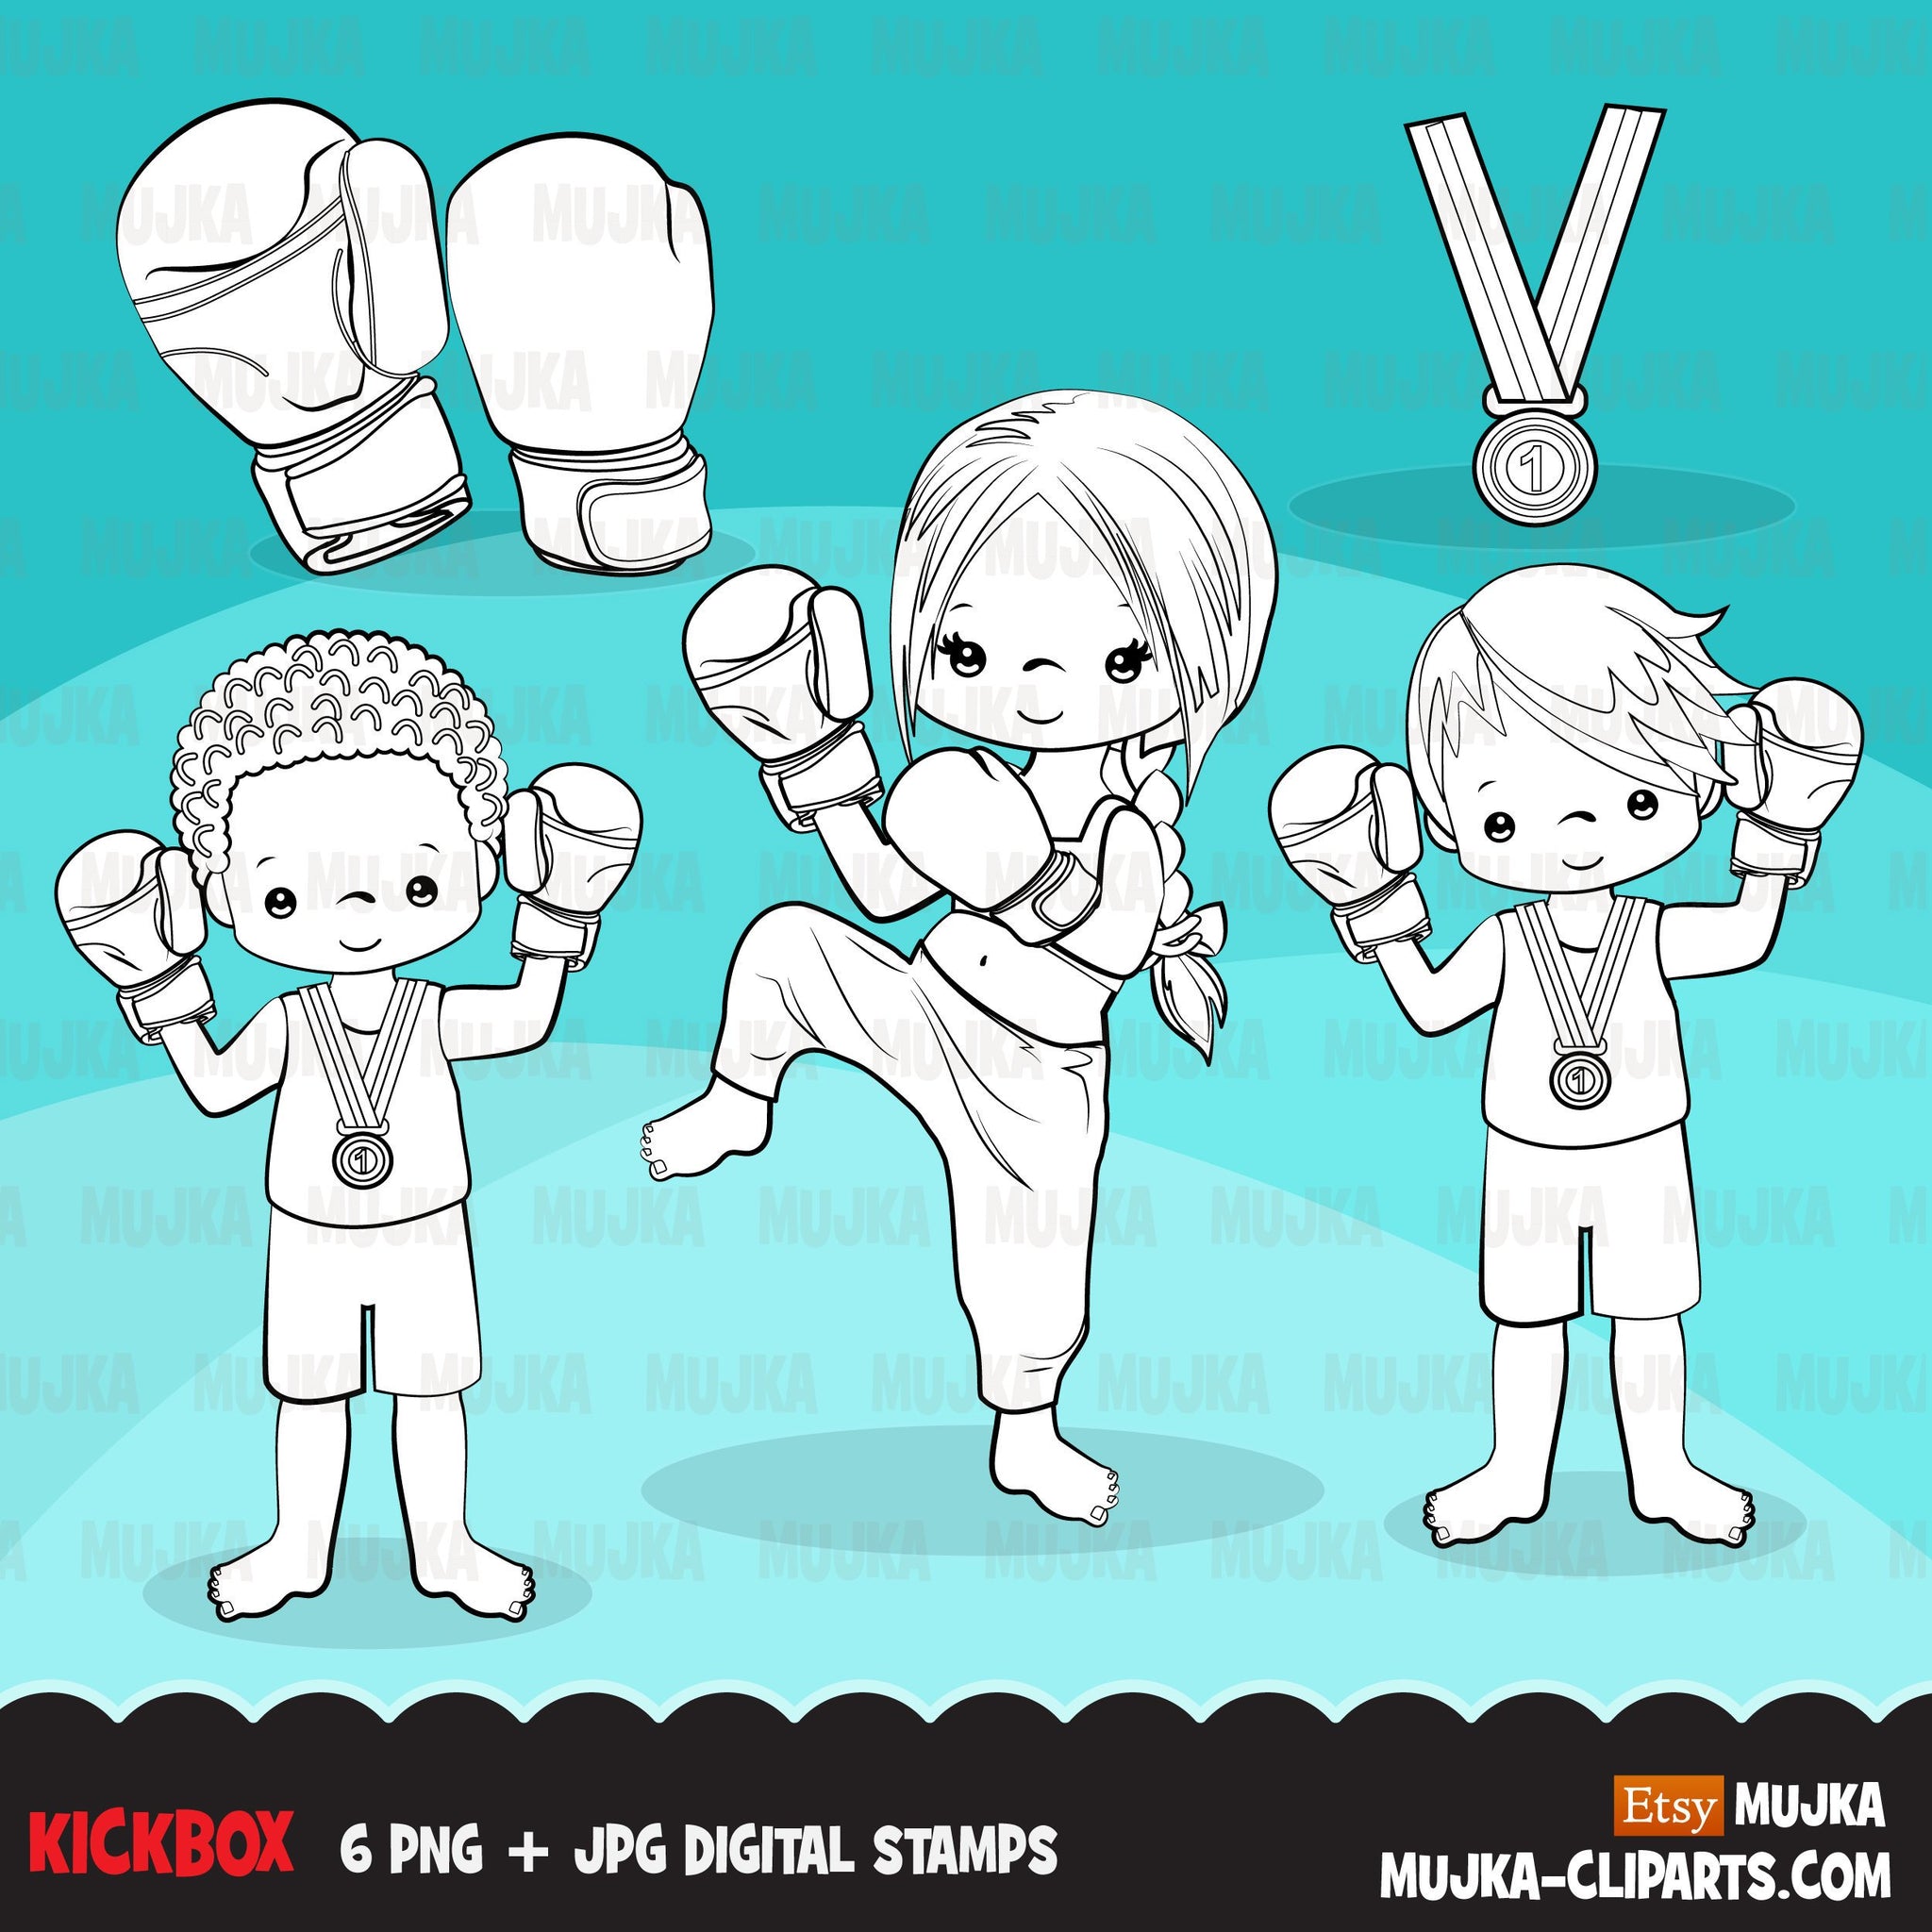 Kickboxing Digital Stamps, Sports Graphics, B&W clip art outline kickbox, boxing gloves